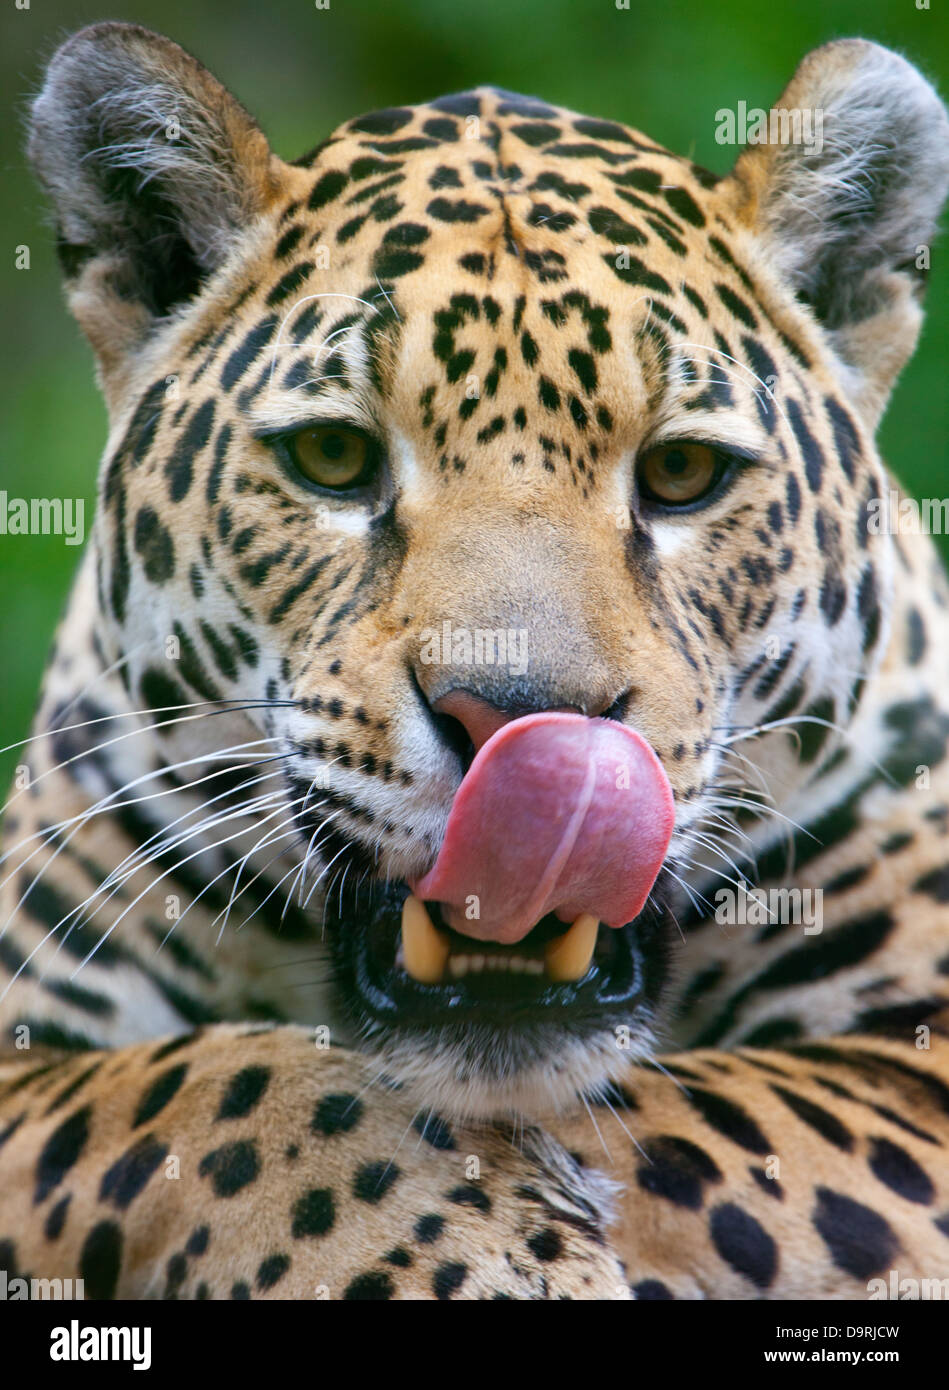 A close up of a Jaguar licking its lips Stock Photo